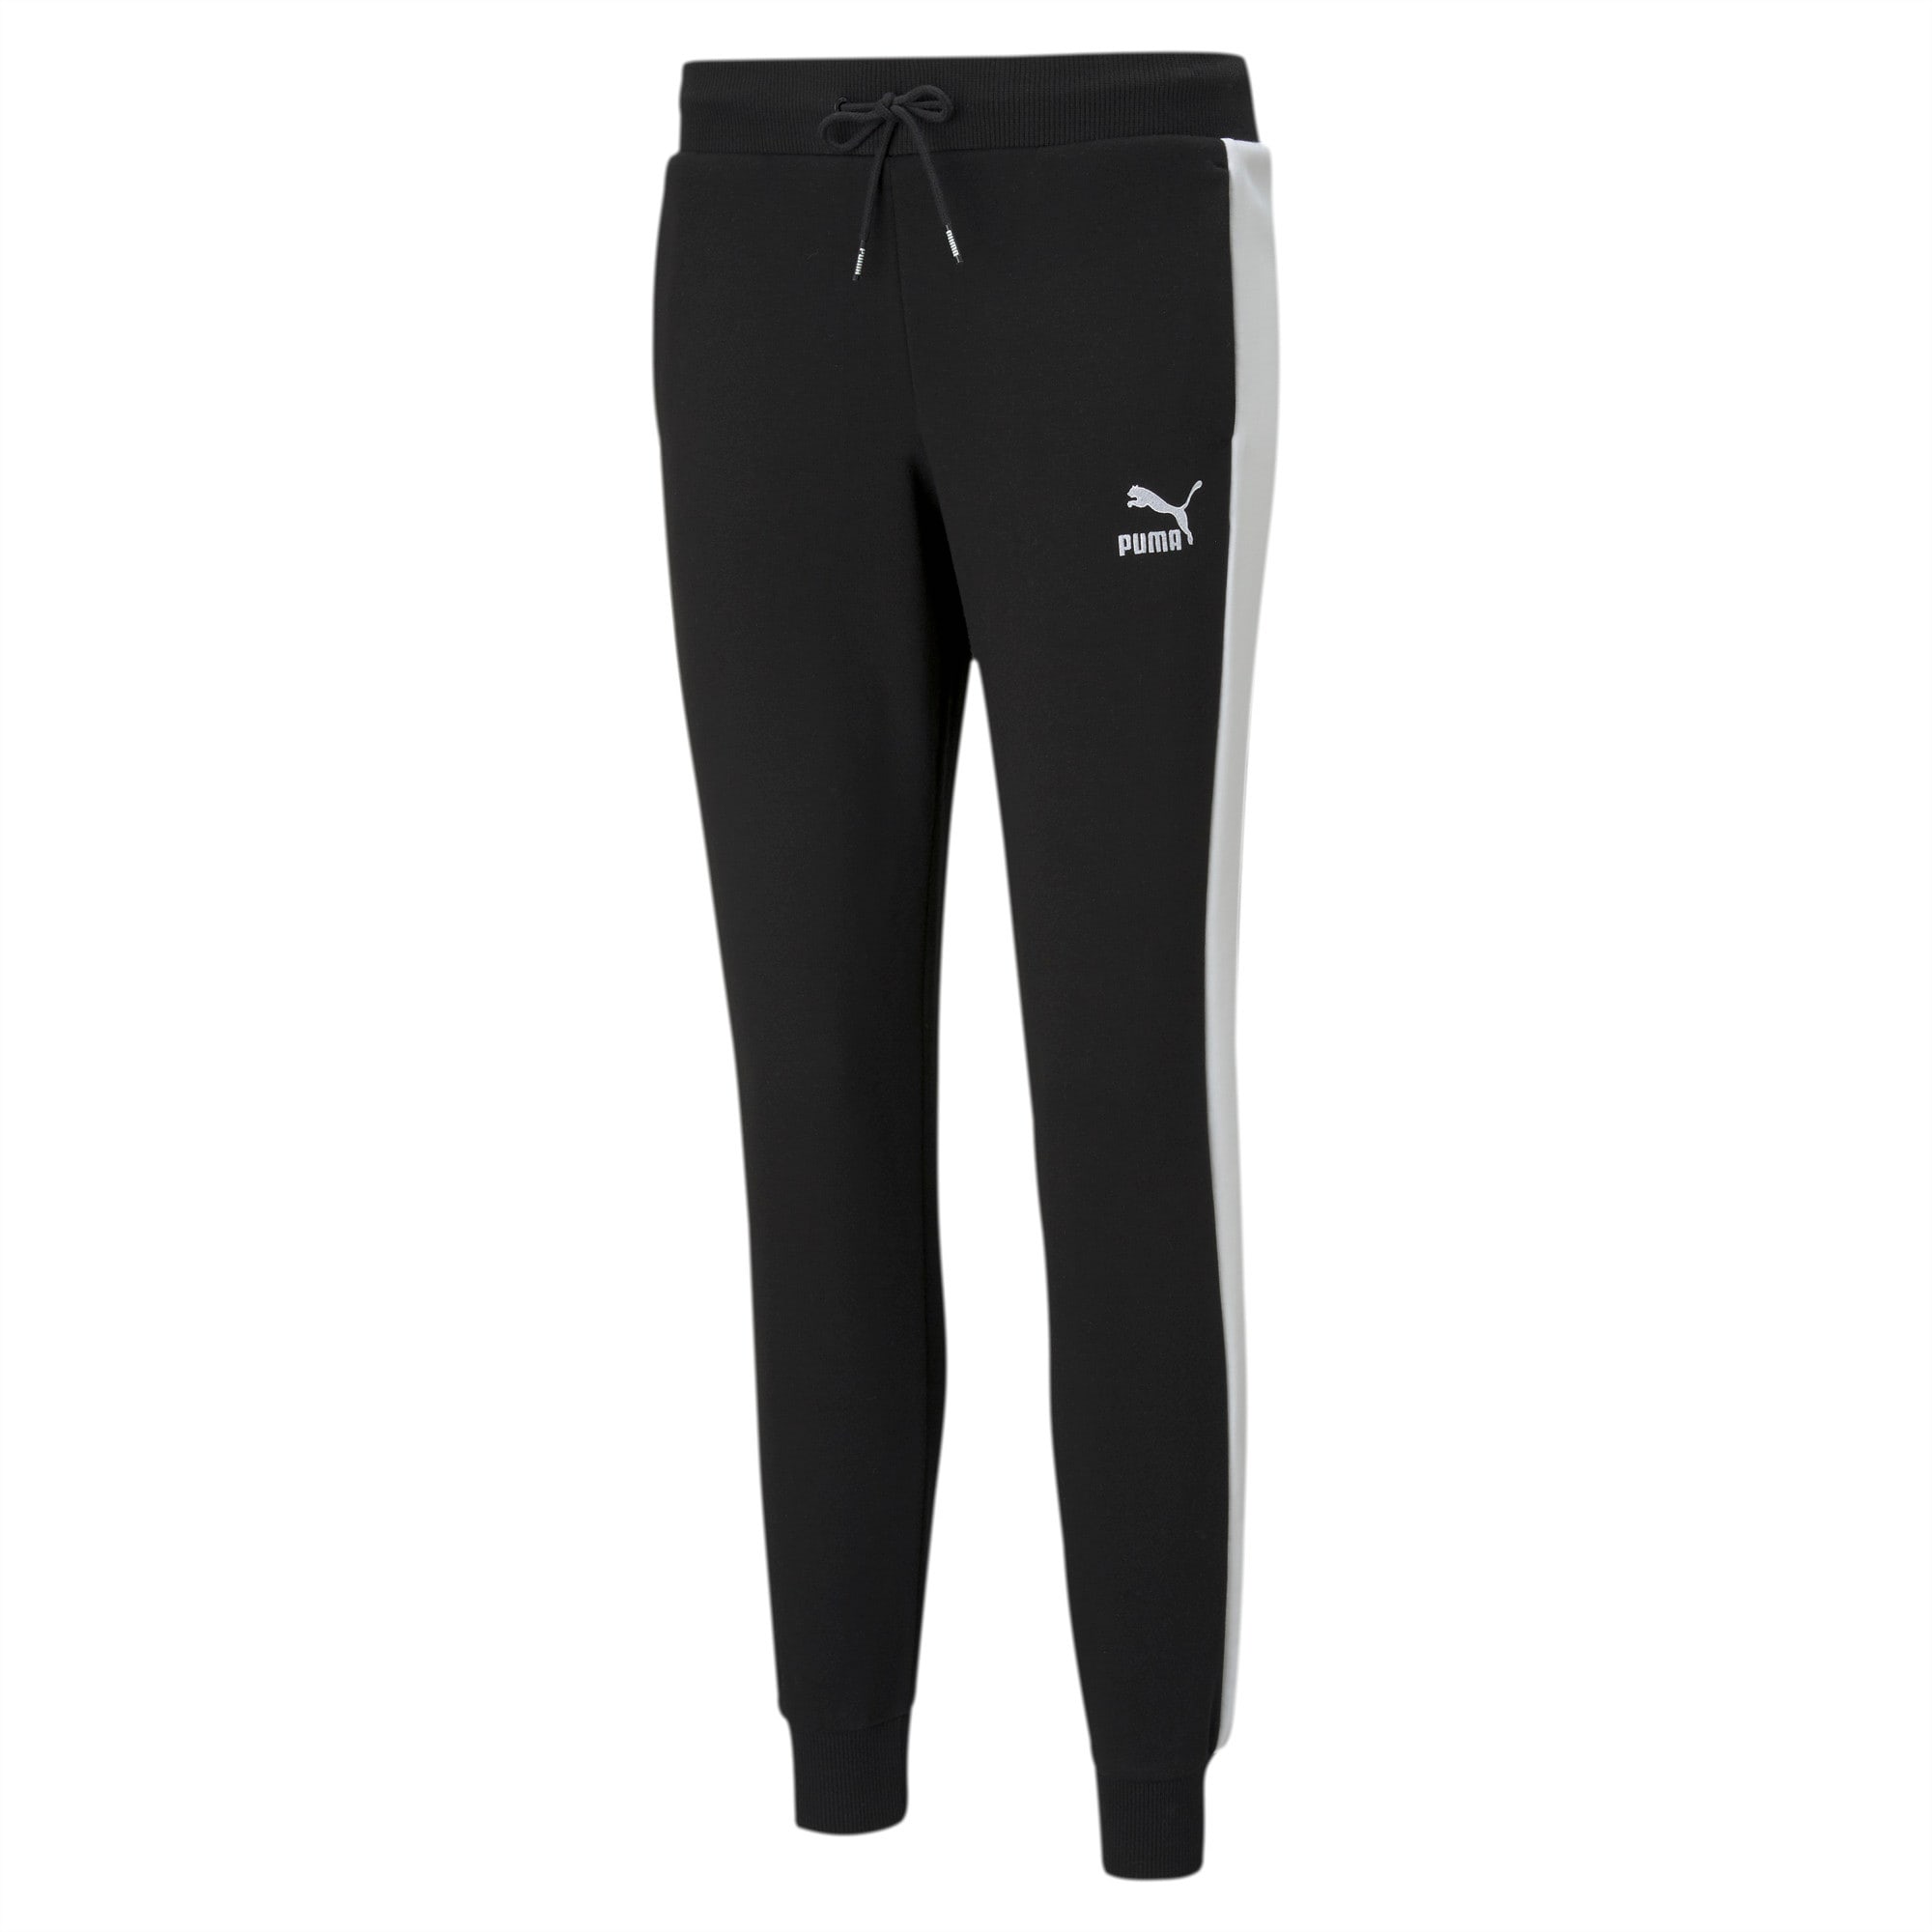 Puma Activewear Sweatpants Women's L Black Solid Track Pants